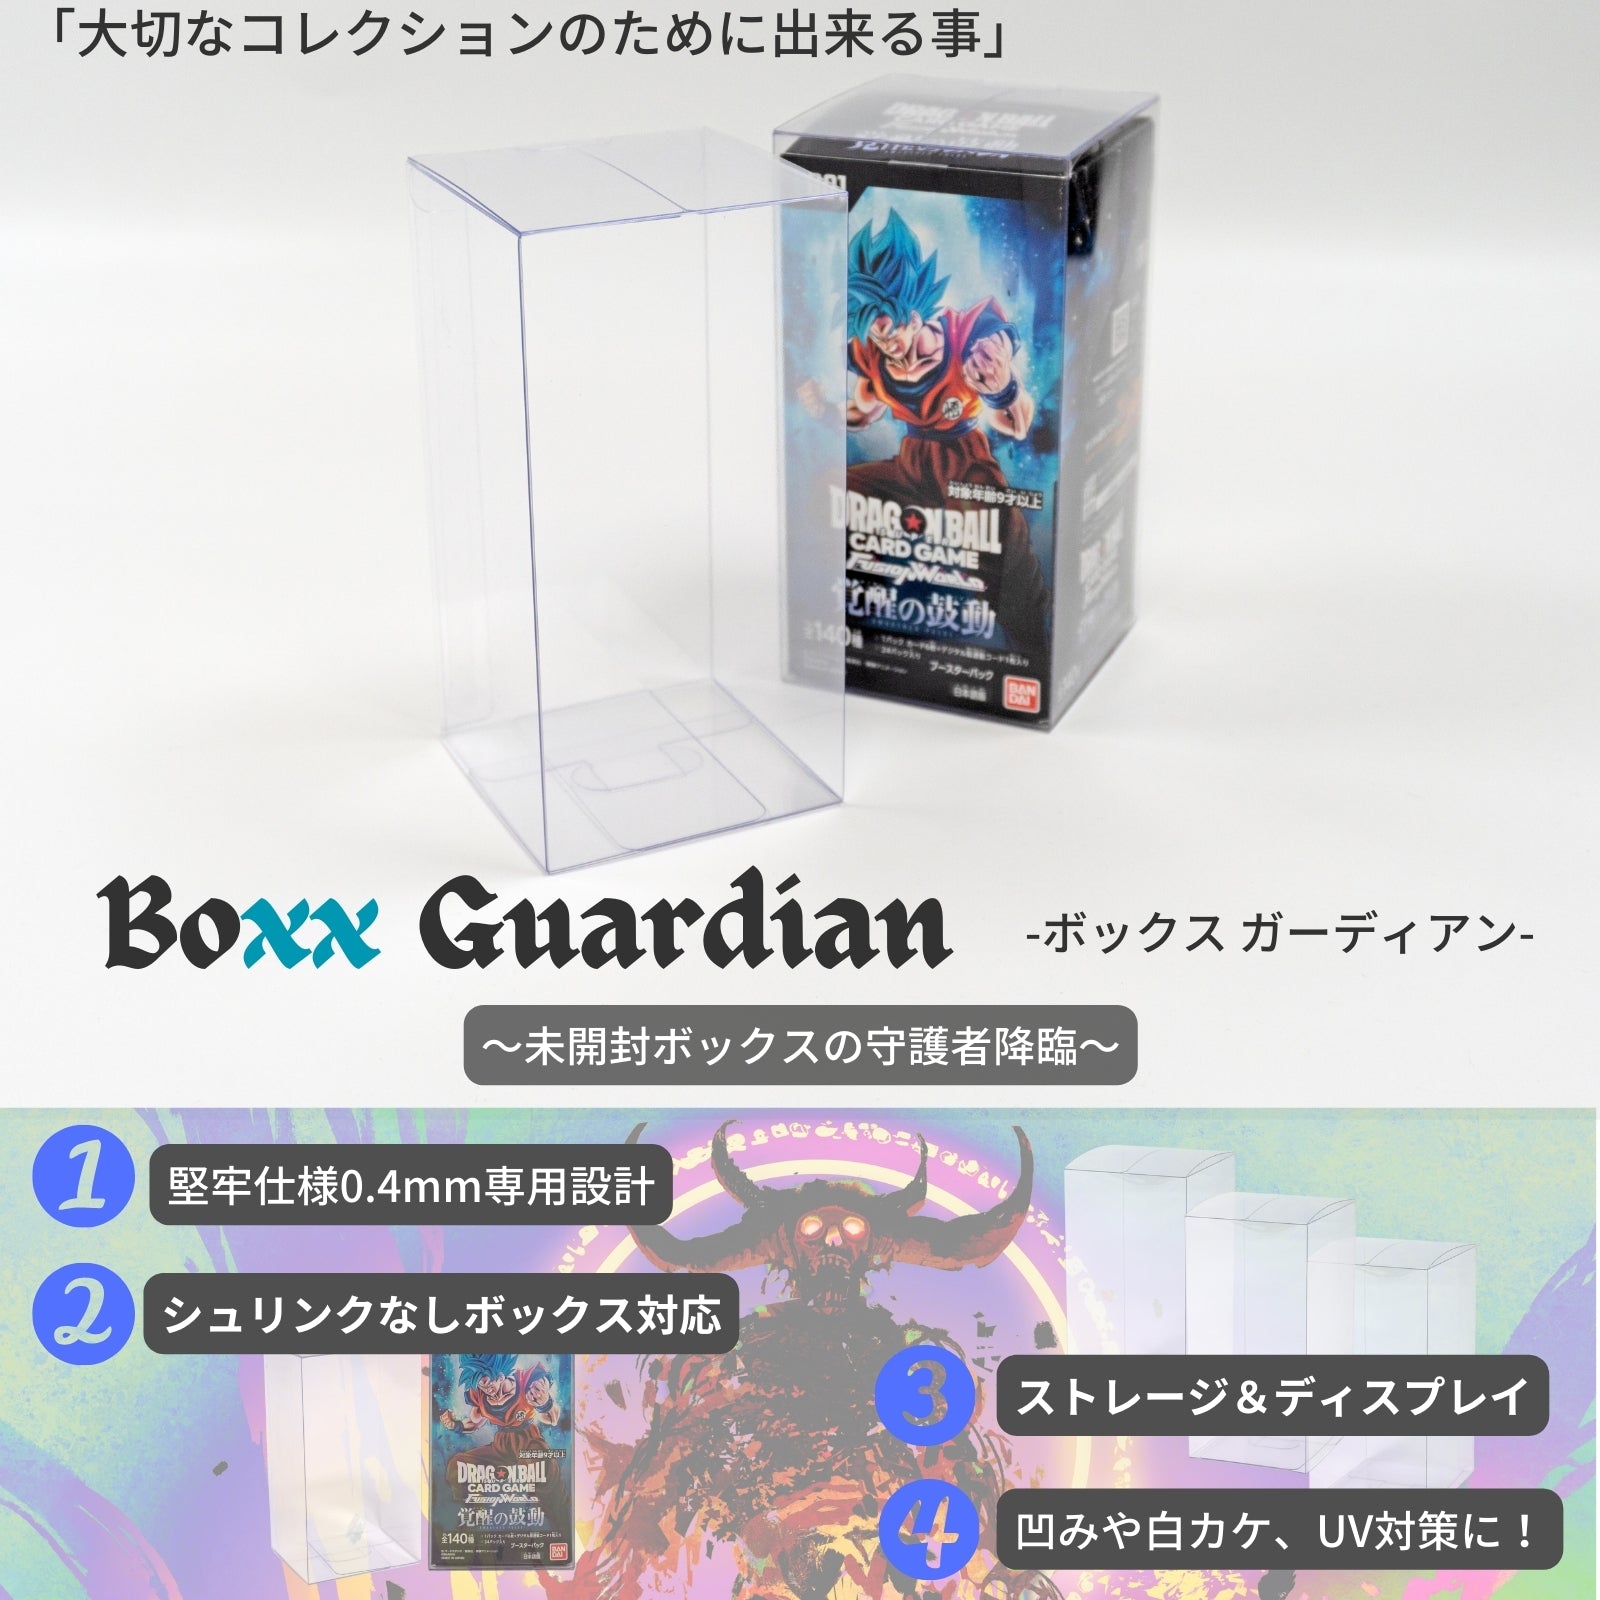 Boxx Guardian ドラゴンボール スーパーカードゲーム フュージョンワールド 用 ブースターパックBOX サイズ